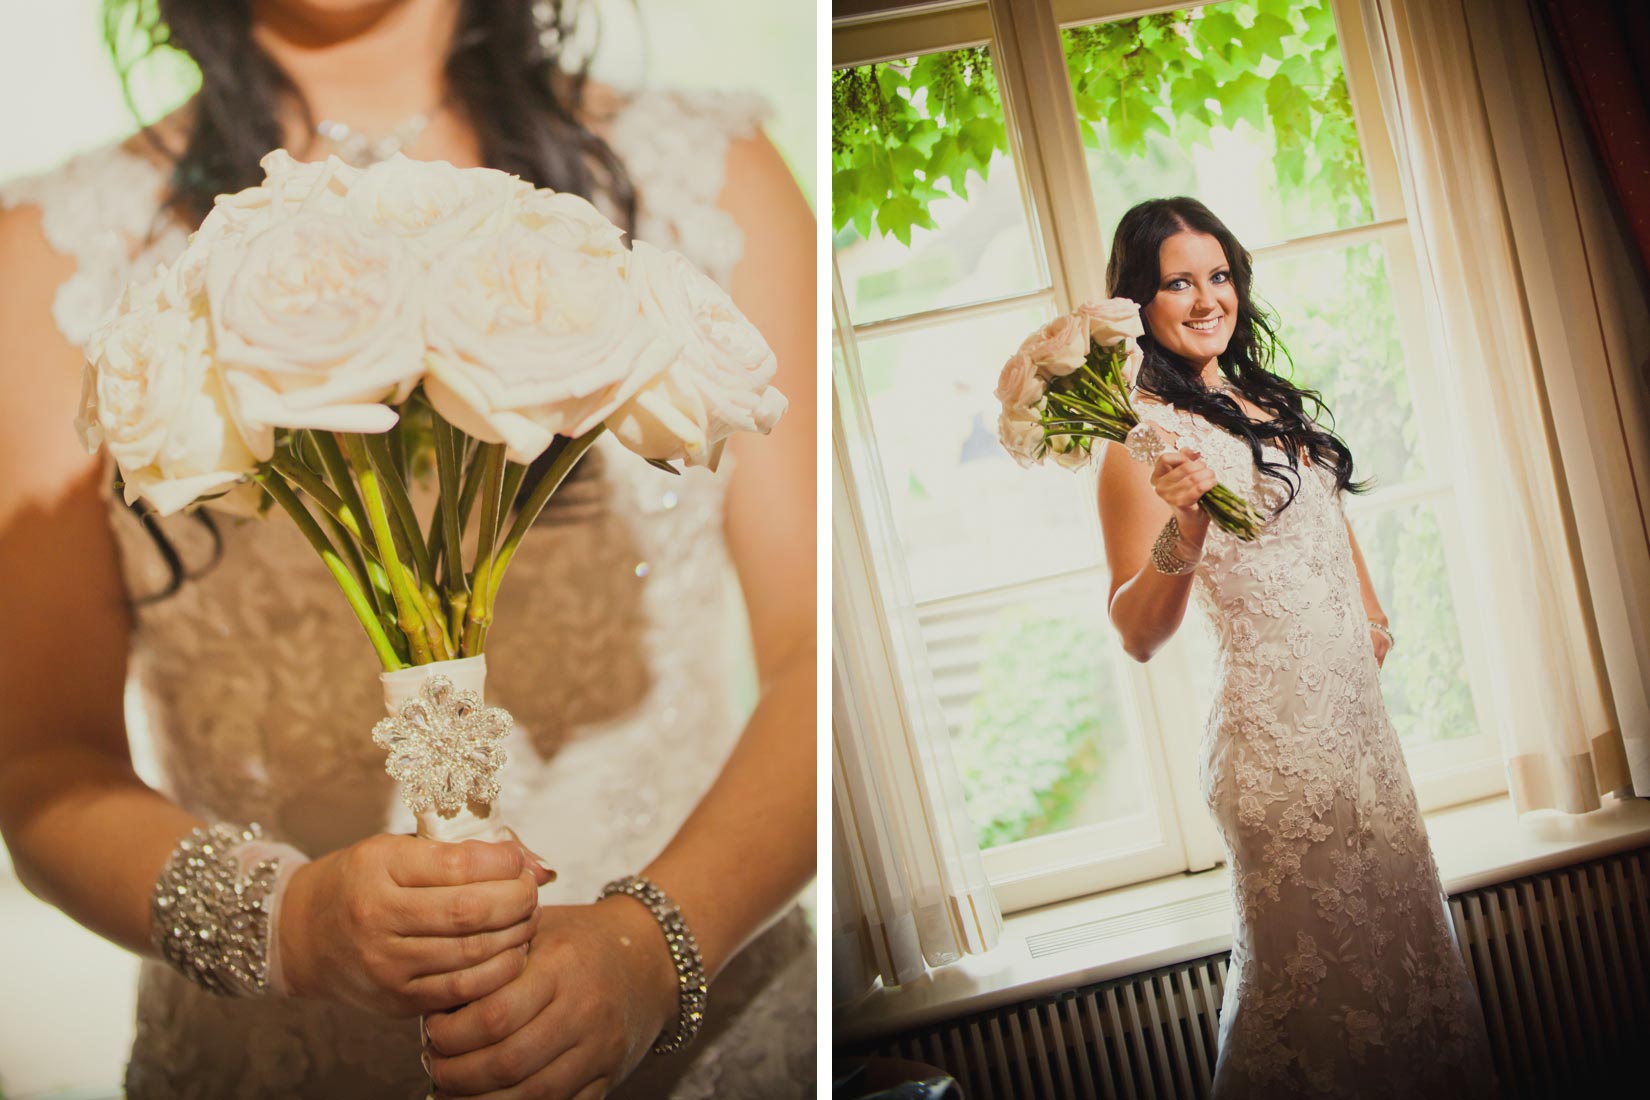 Vrtbovska Garden wedding / W&N / elopement wedding